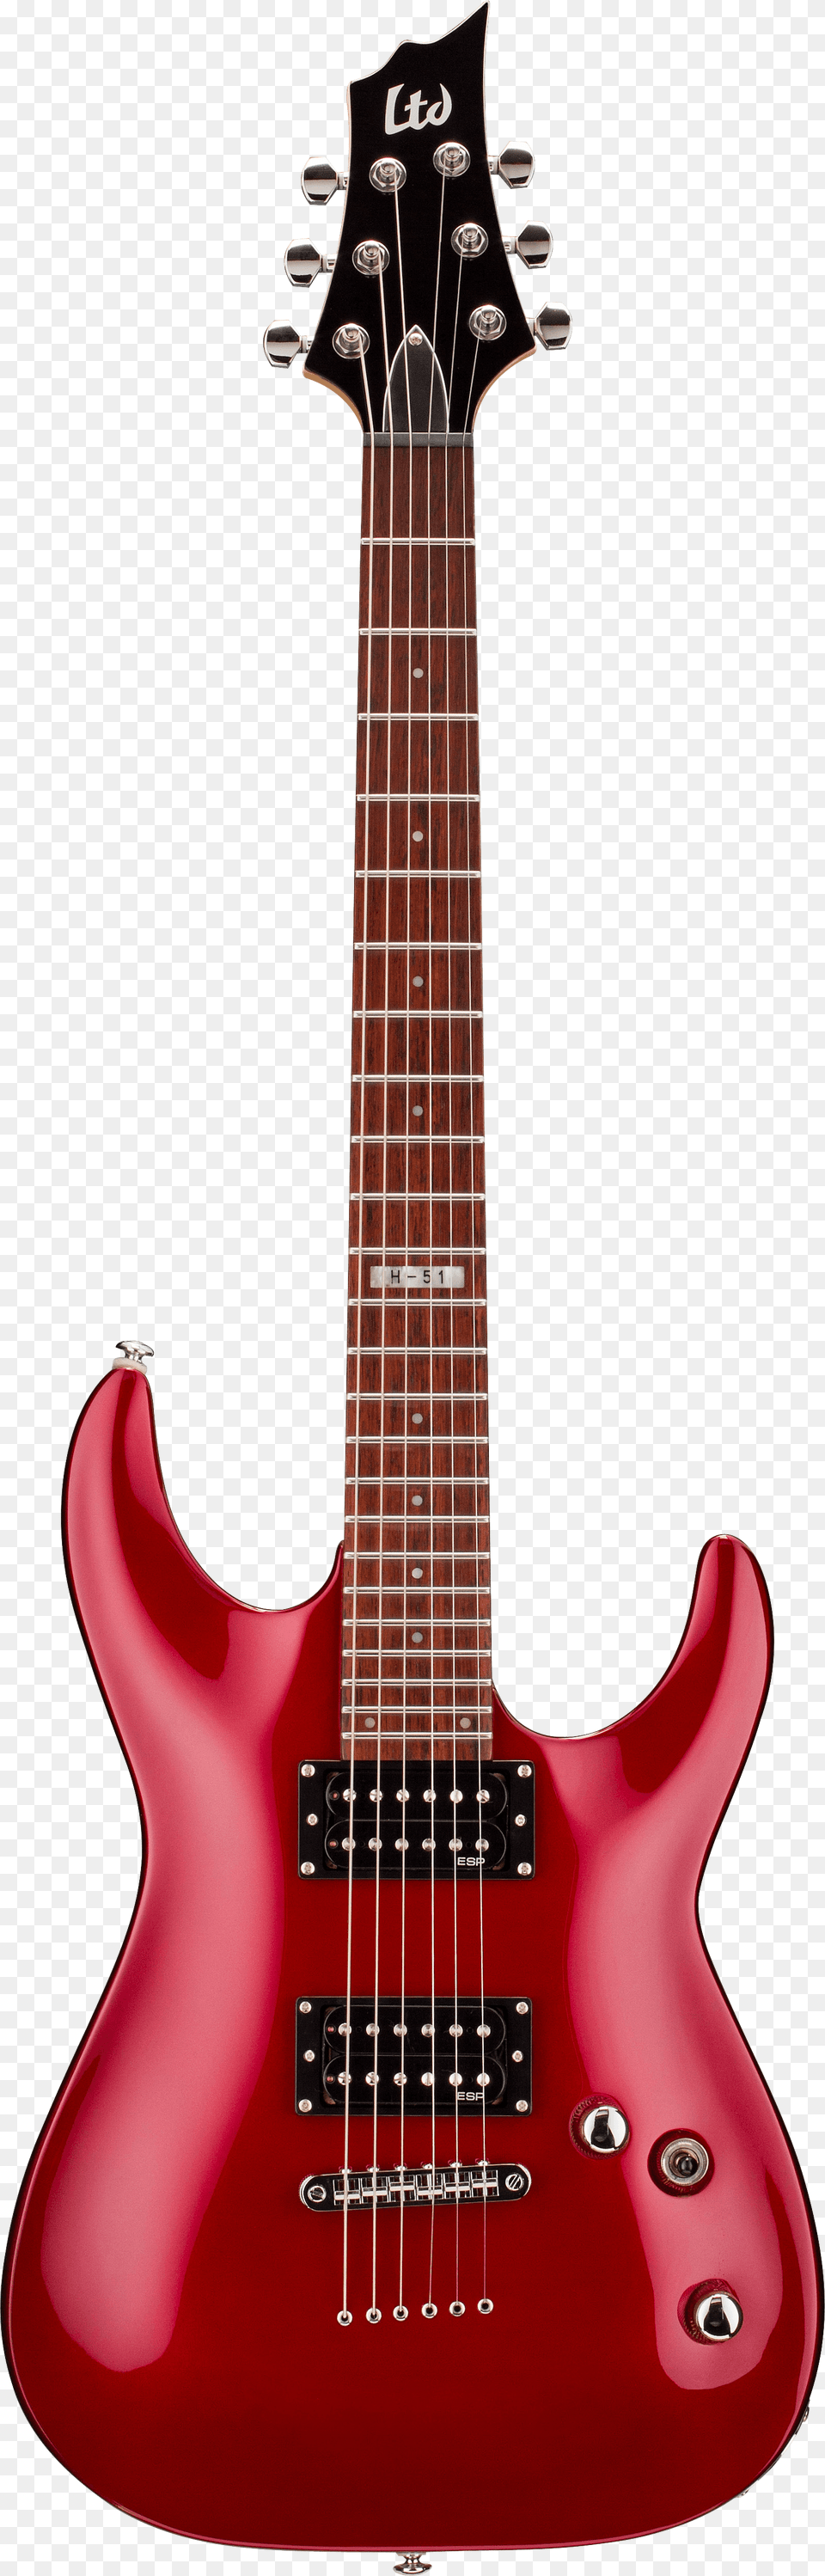 Guitar, Bass Guitar, Musical Instrument, Electric Guitar Free Png